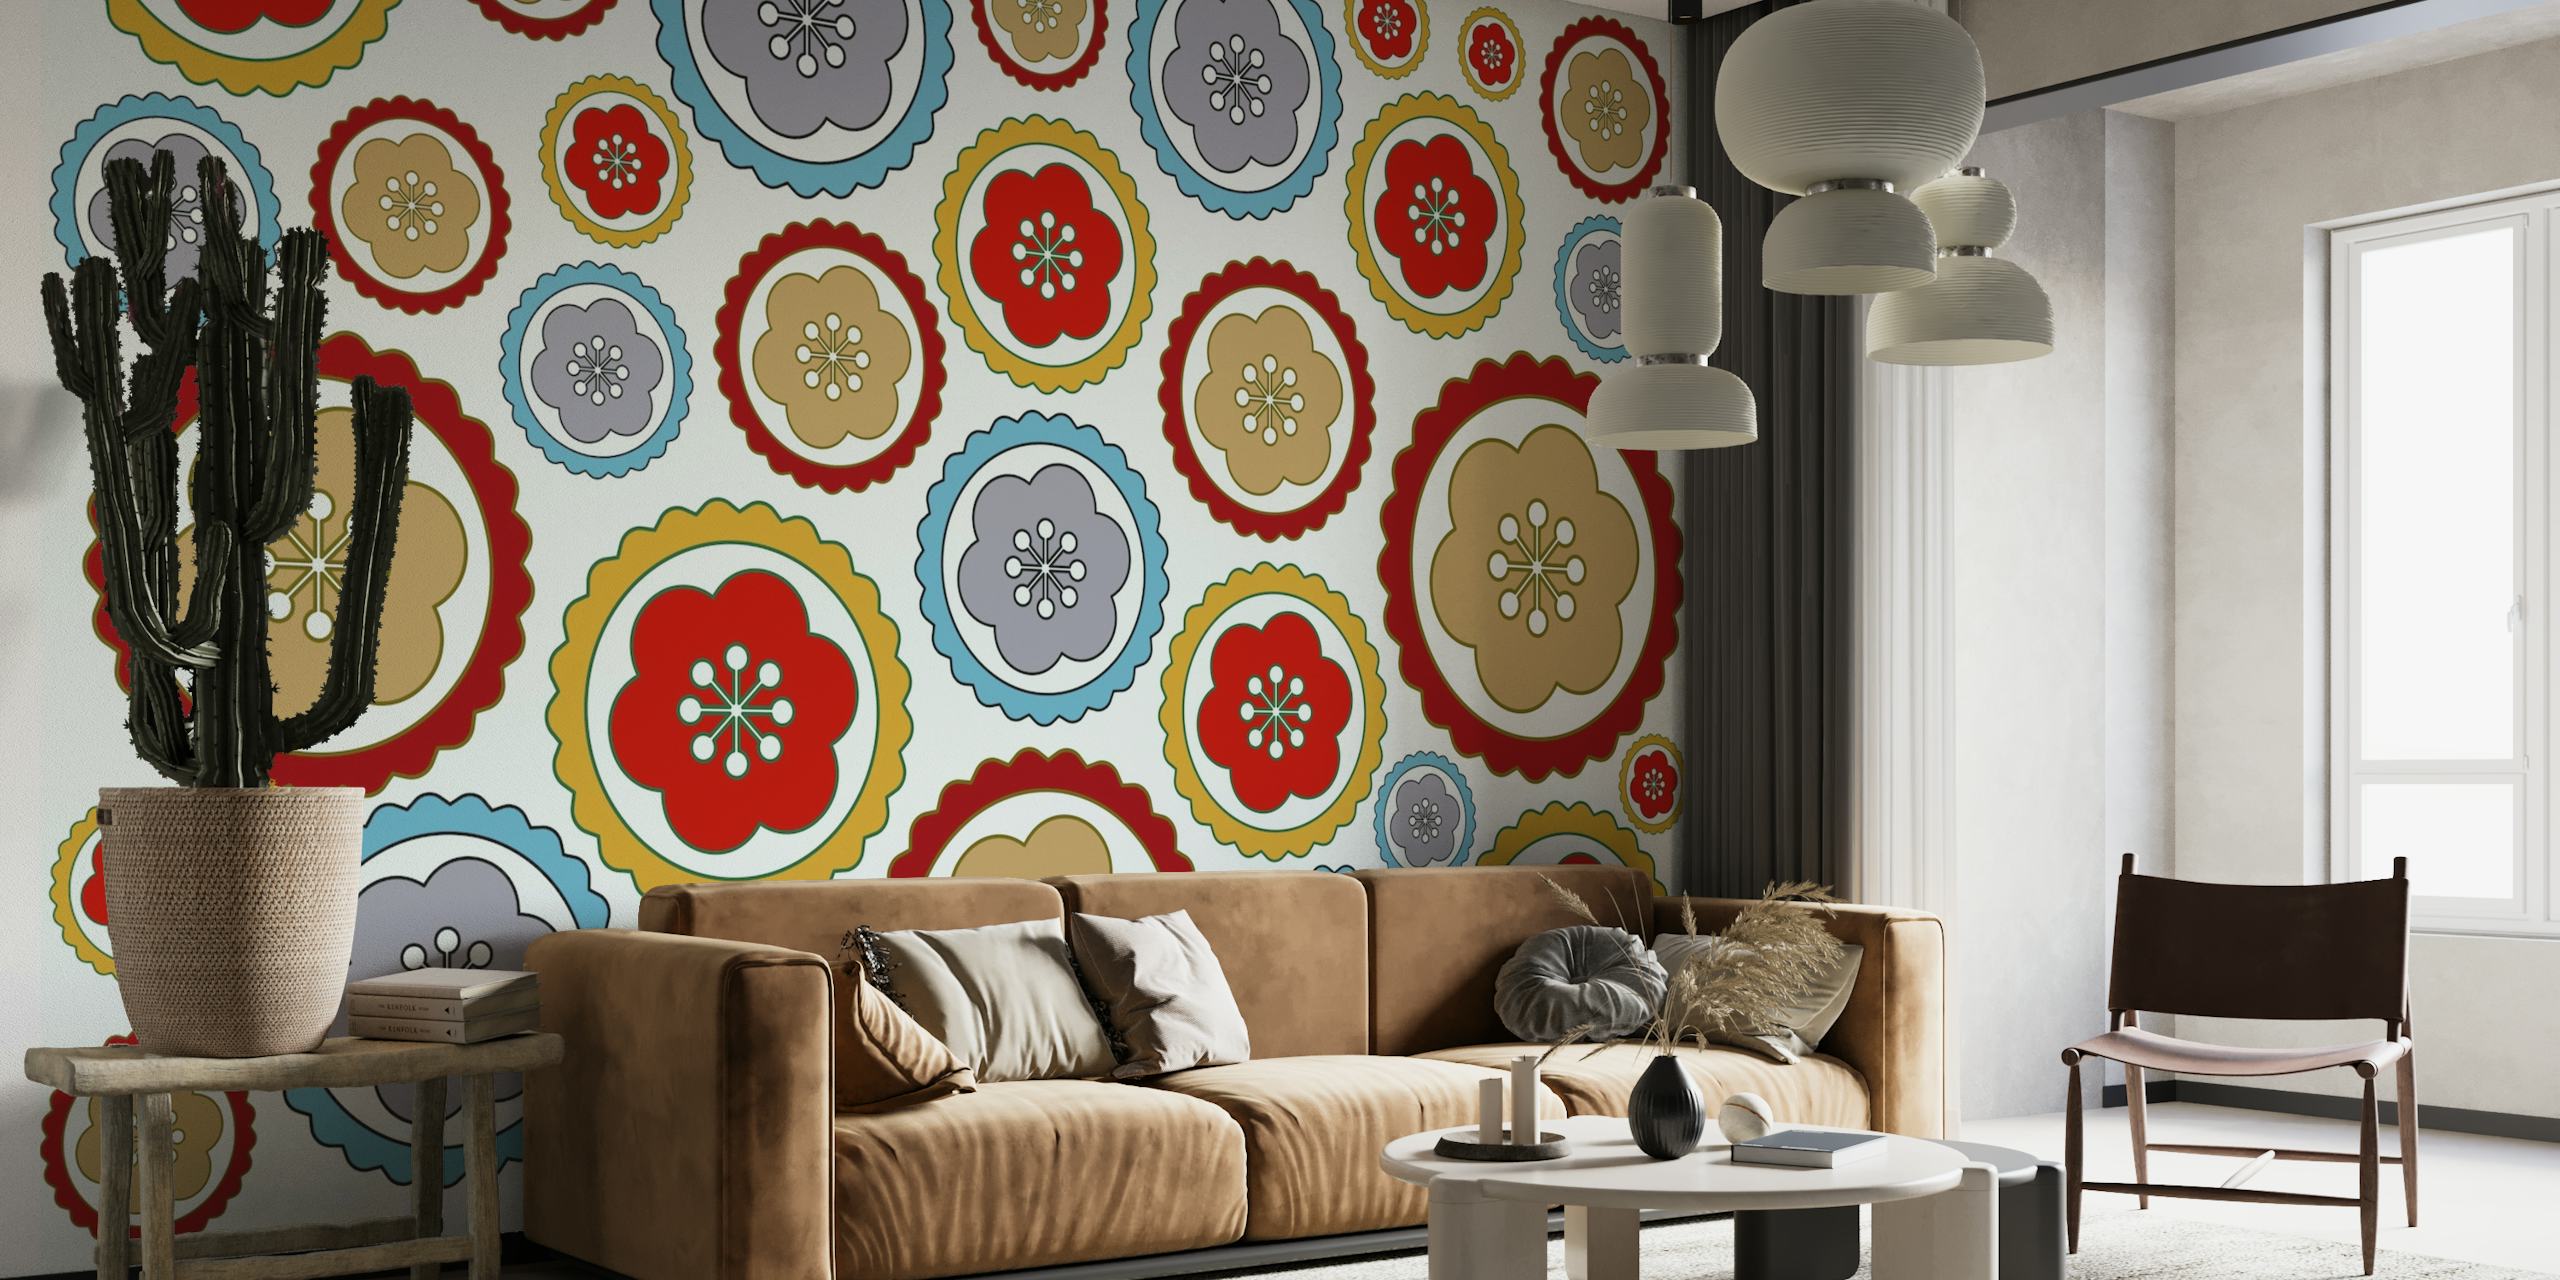 Fargerik retro-stil tusenfryd mønster veggmaleri for et vintage dekor tema